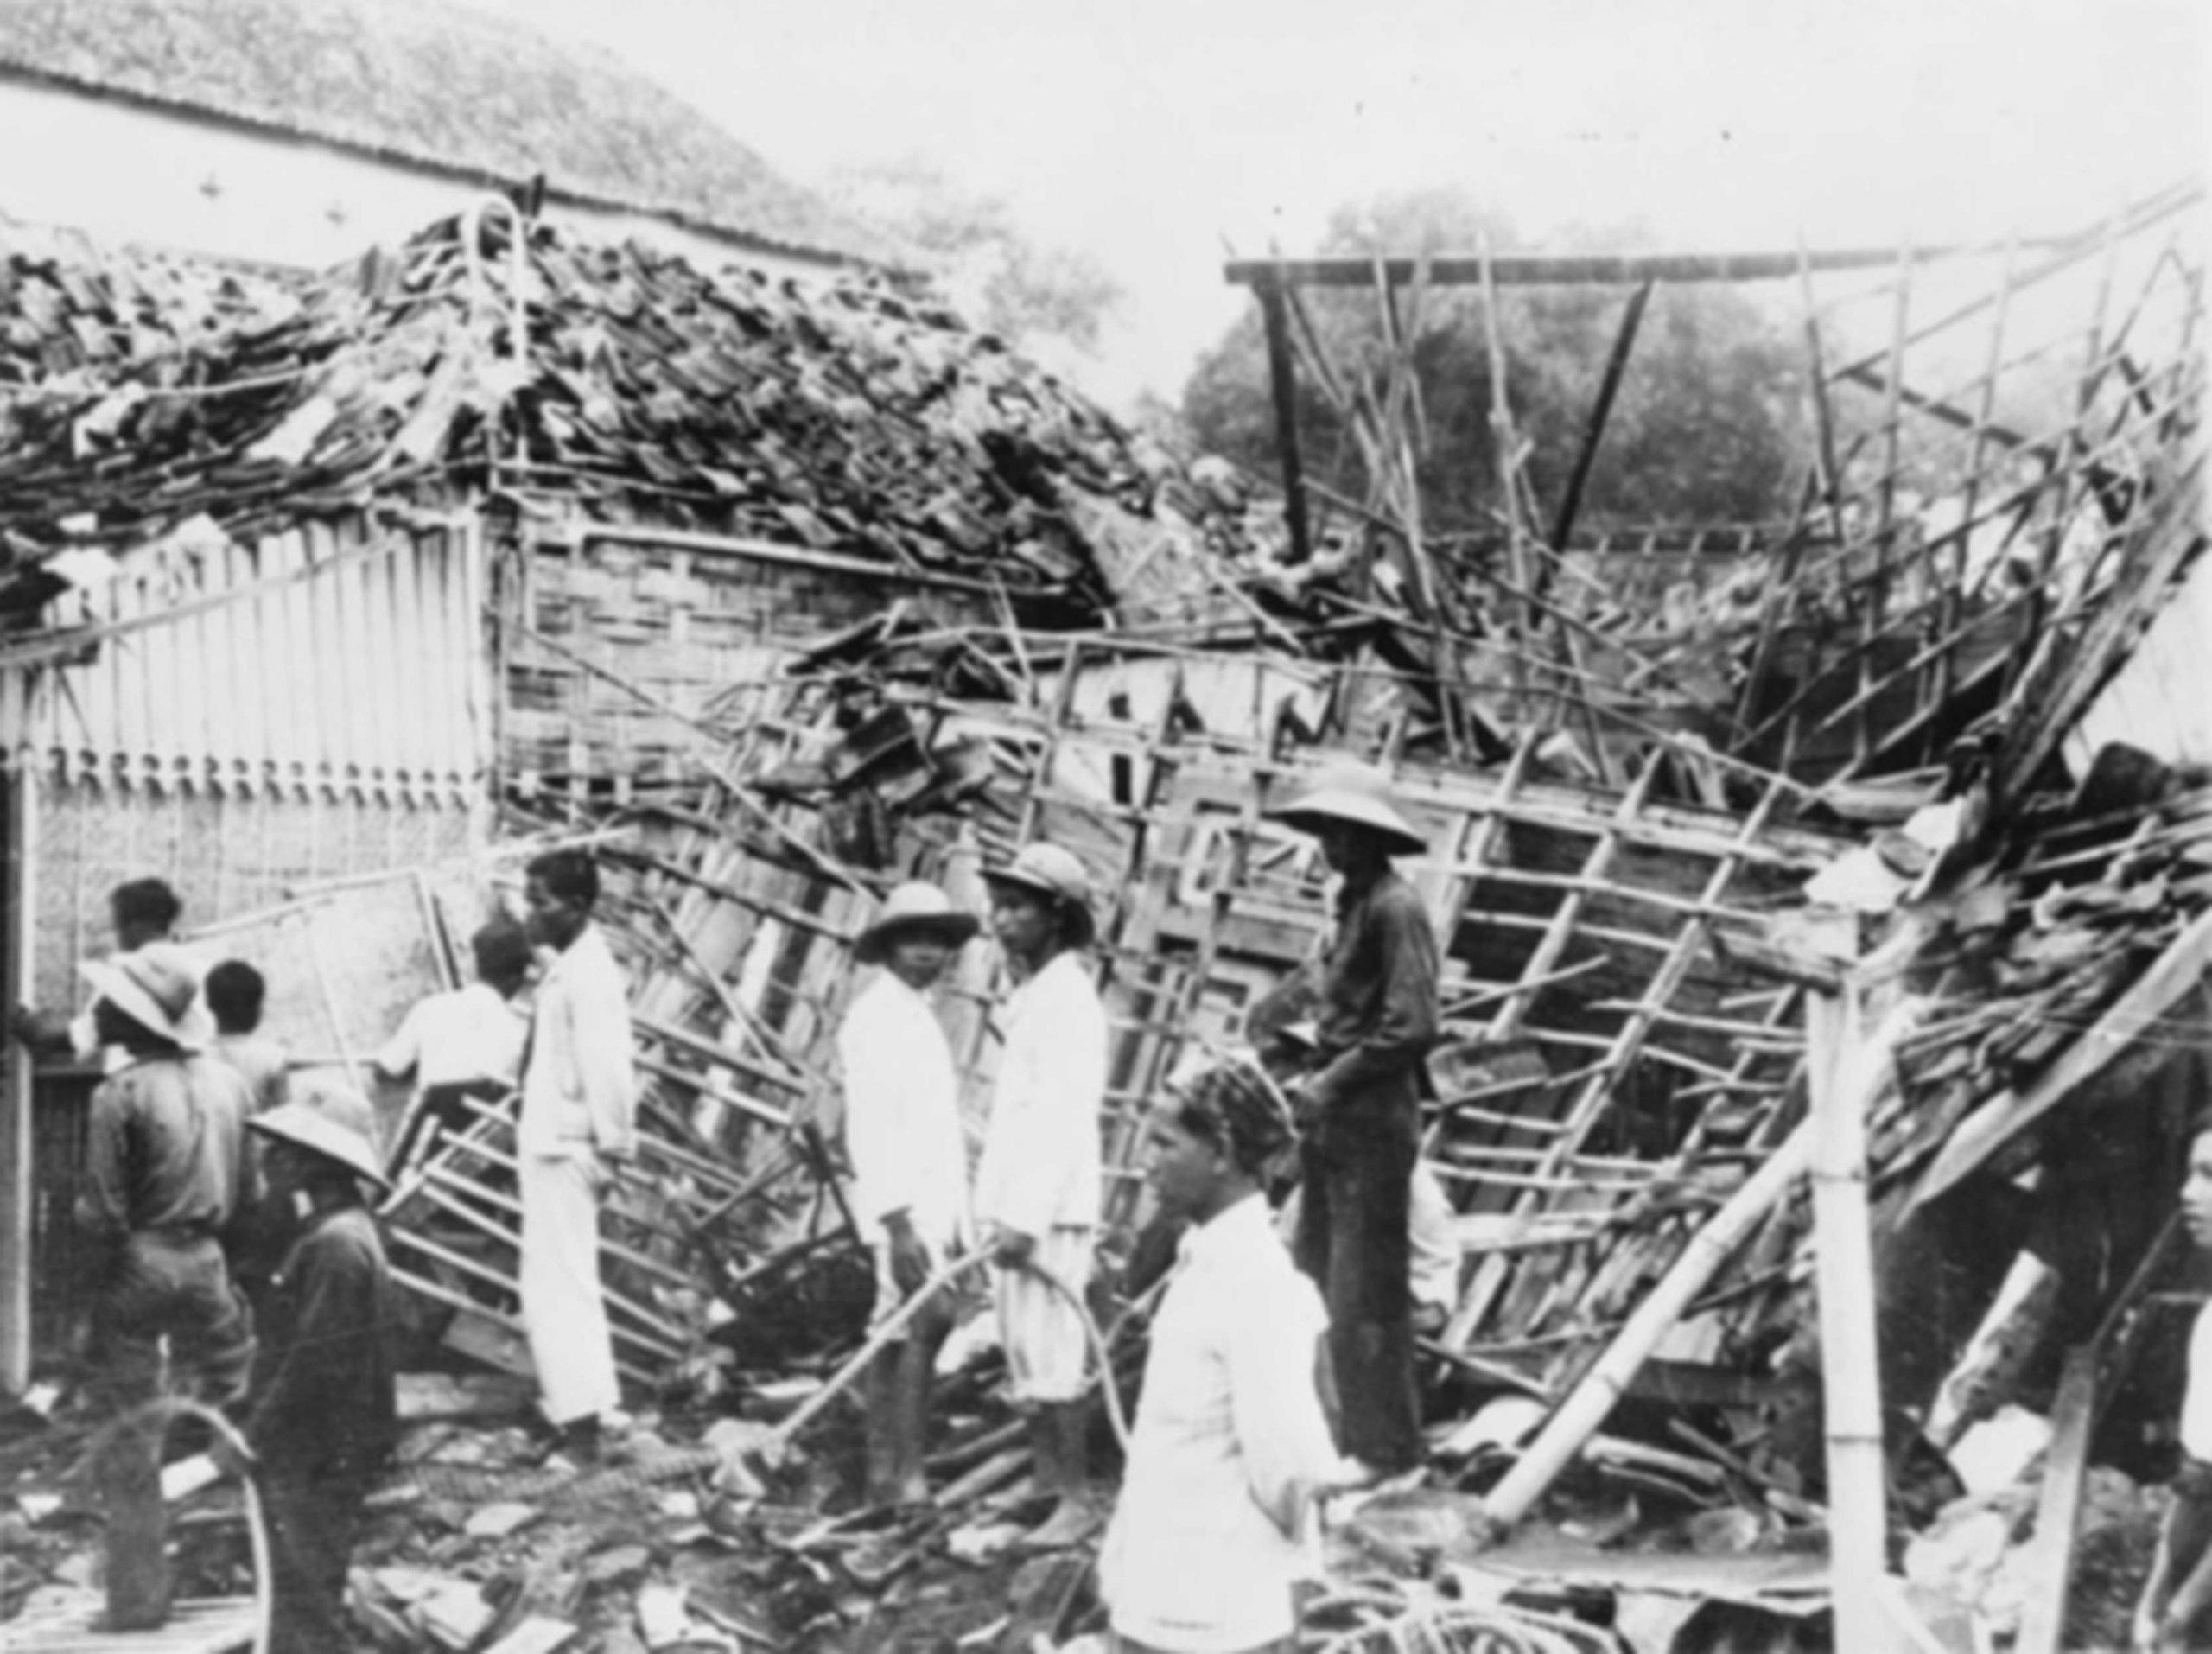 Destruction in Surabaya on the island of Java